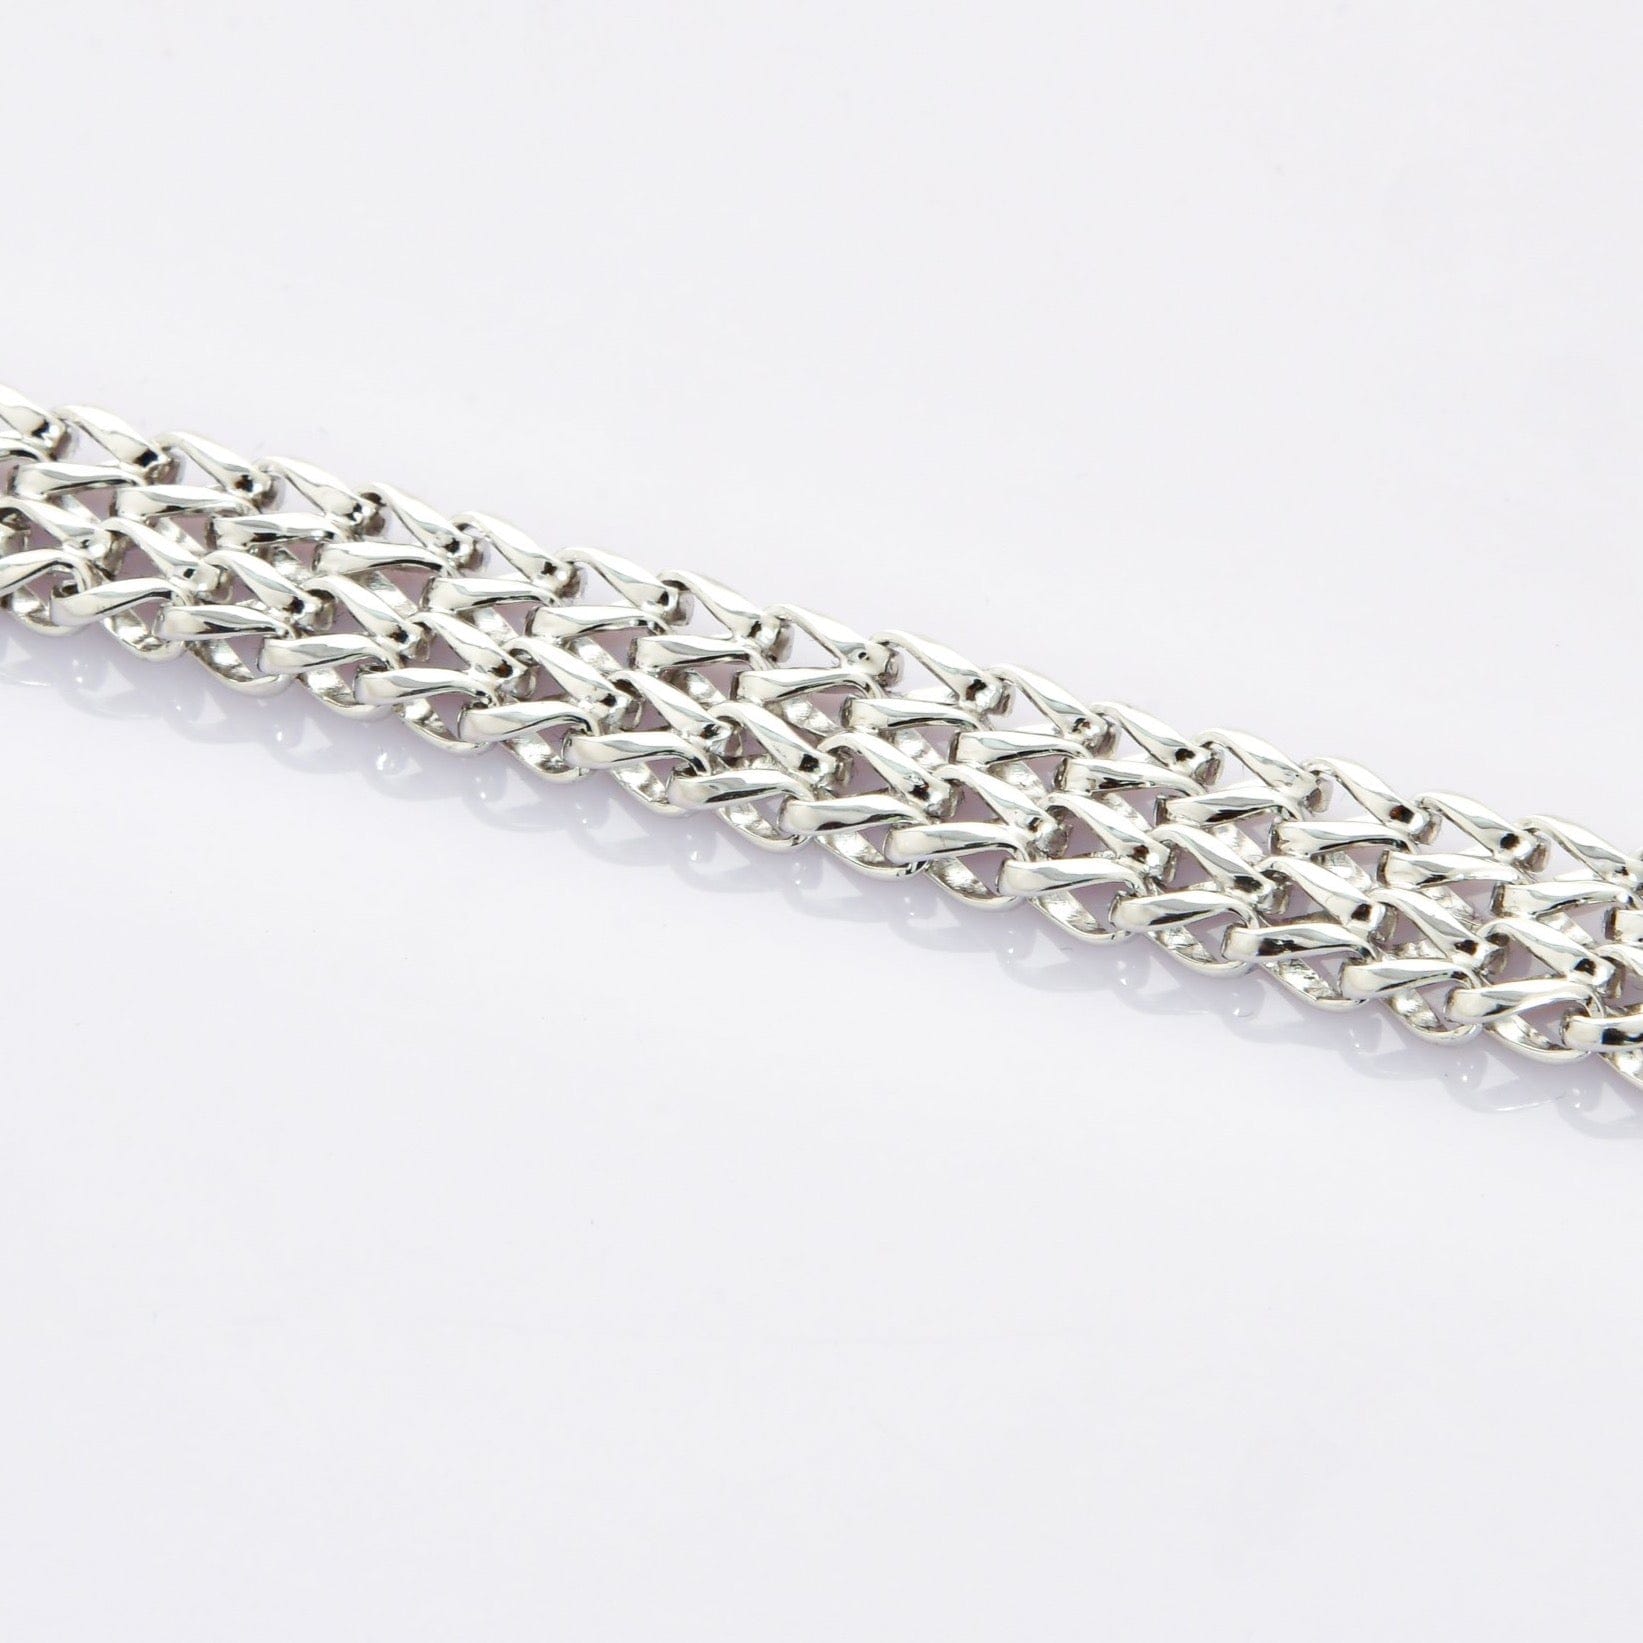 Stainless Steel Platinum Bracelet  Stainless Steel Silver Hand Chain  Bracelet for Men  Stylish Thick